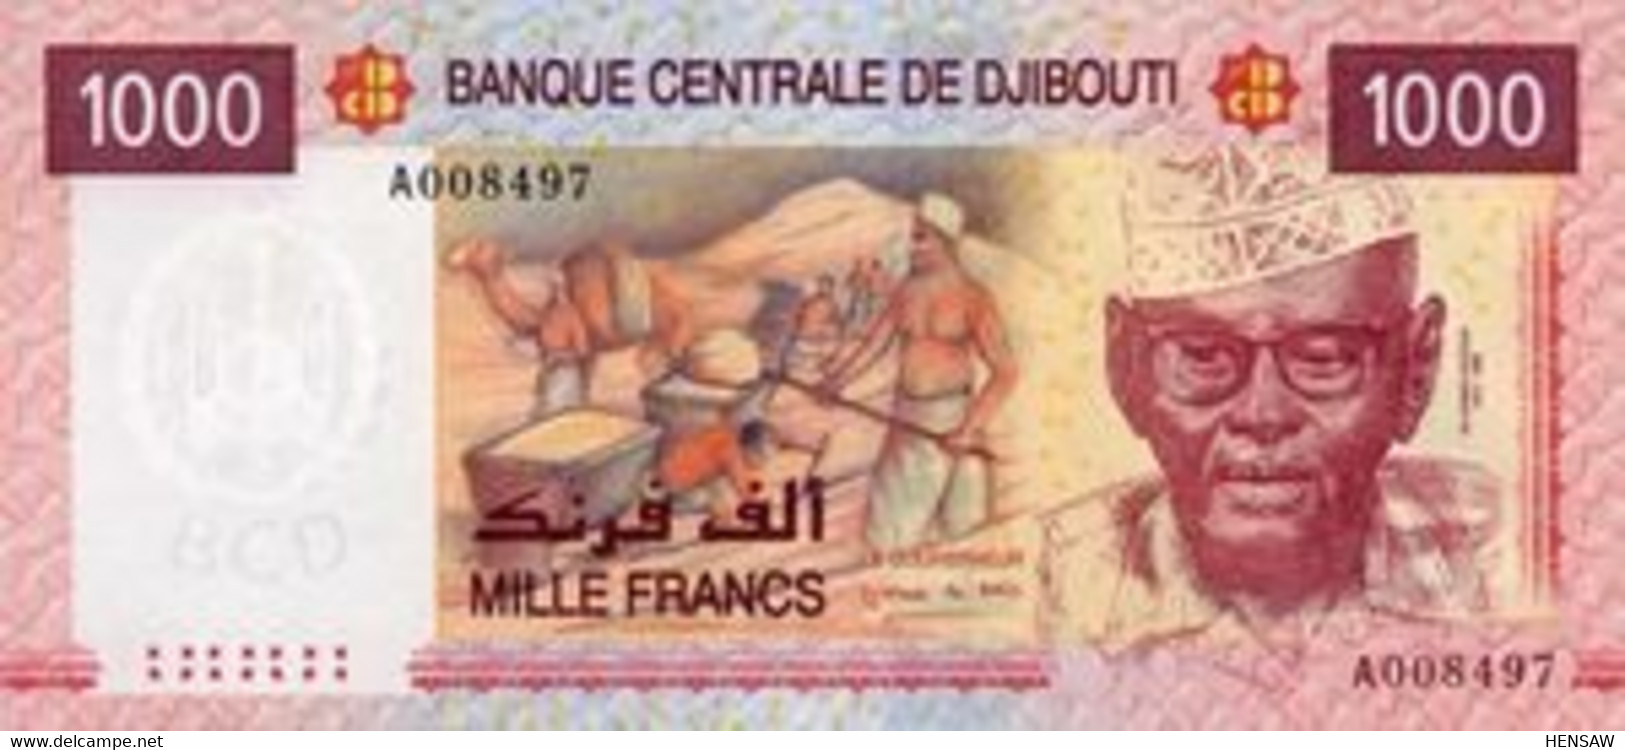 DJIBOUTI 1000 FRANCS P 42 2005 UNC SC NUEVO - Djibouti